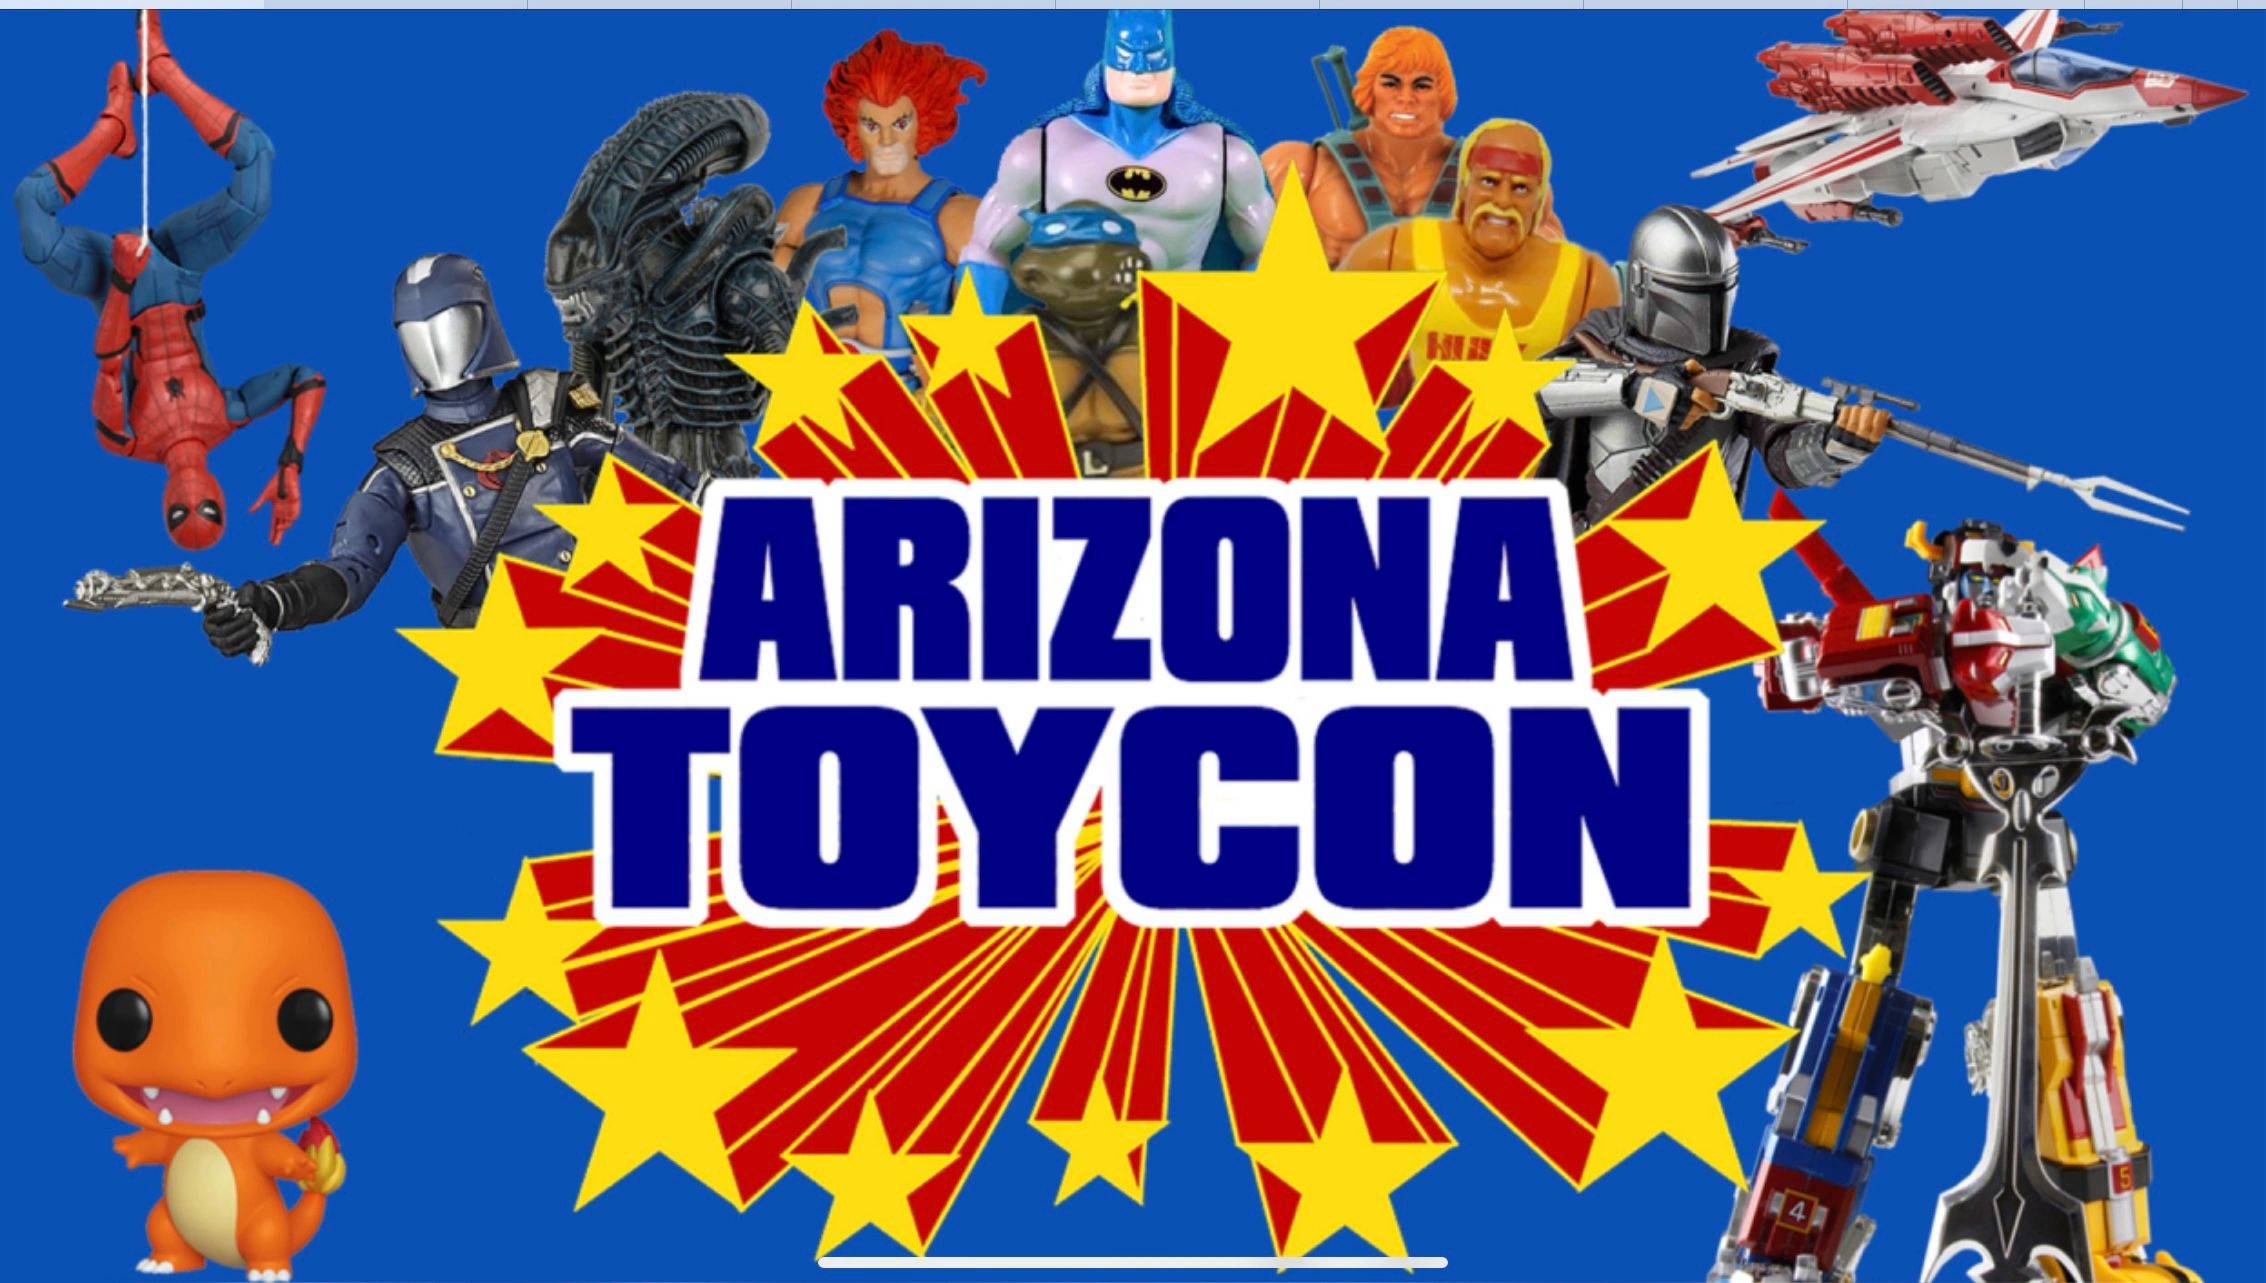 Arizona Toy Shows